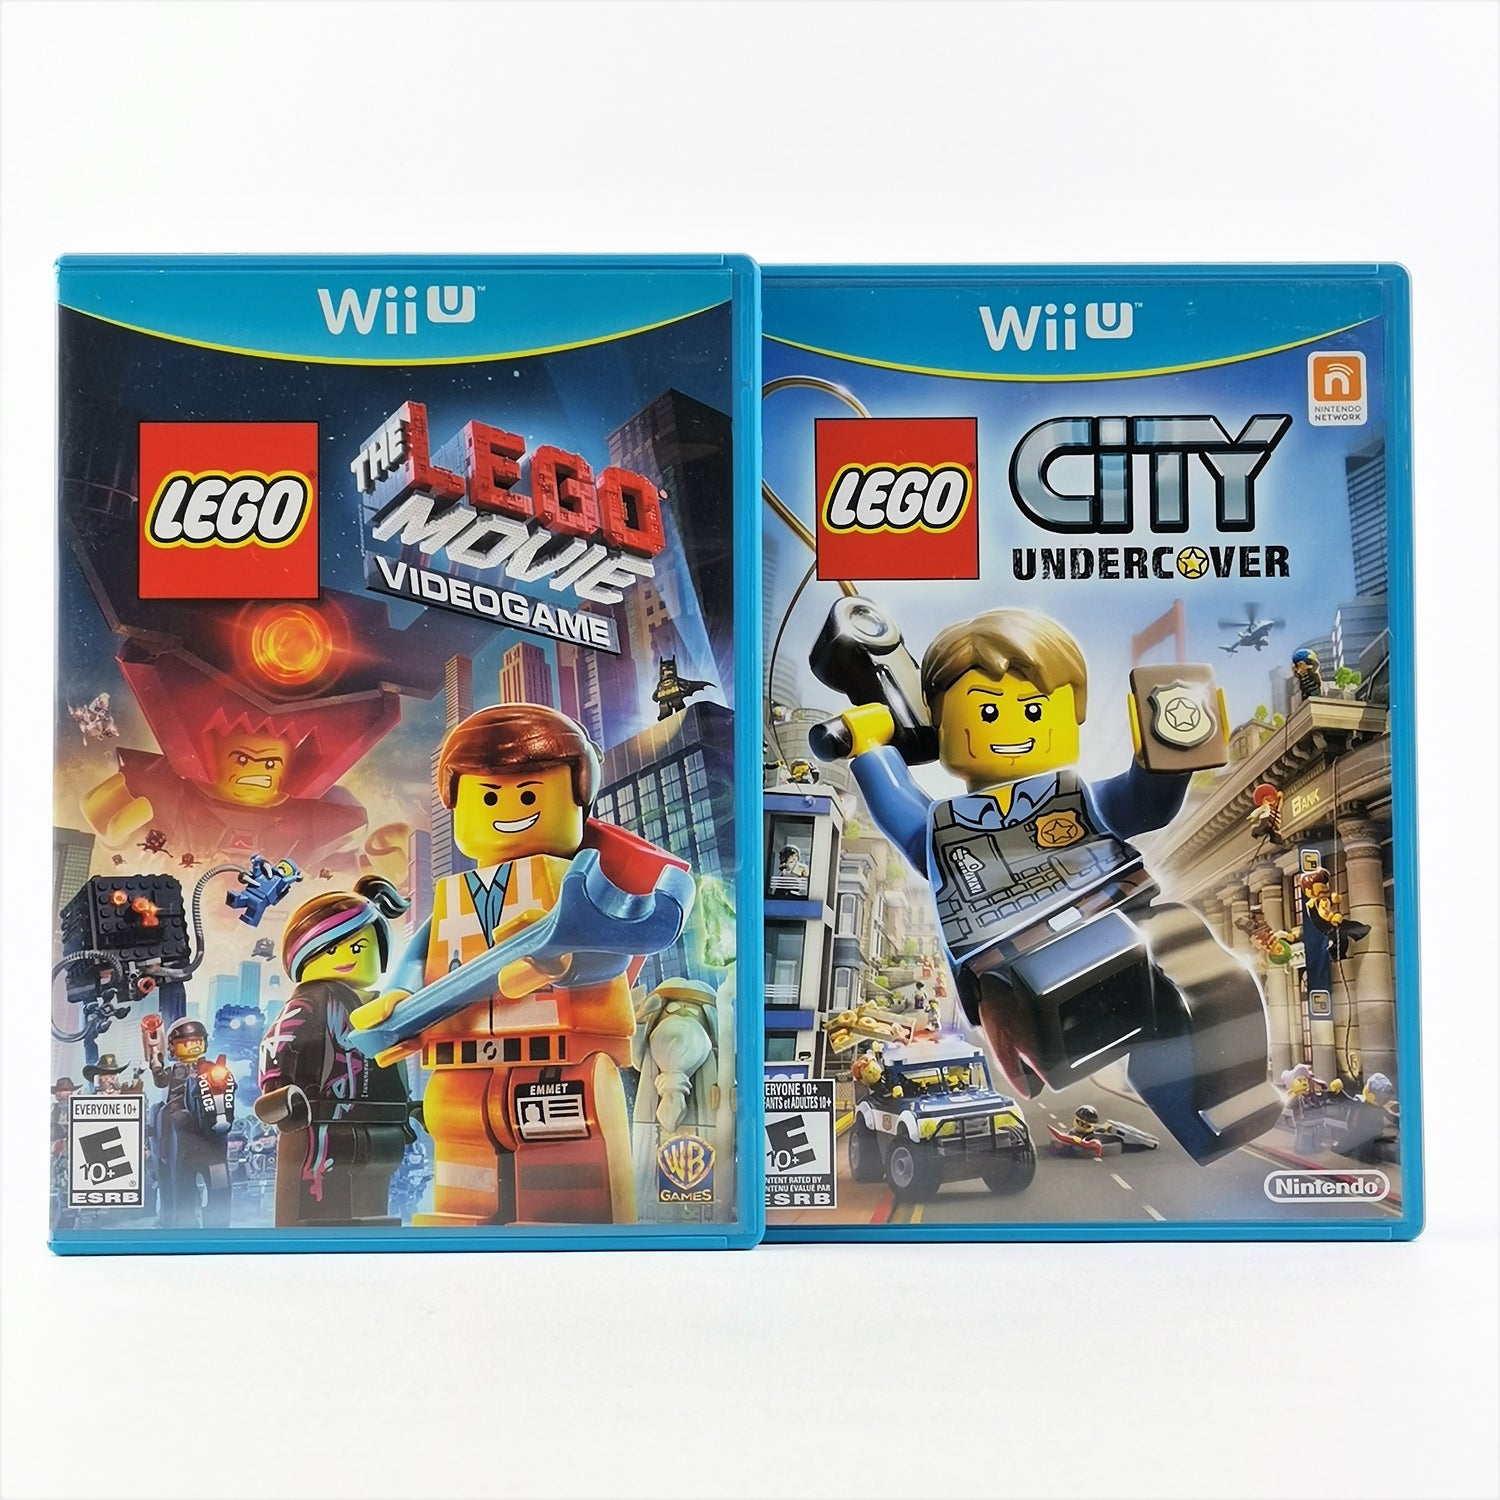 Nintendo Wii U games: Lego The Movie & Lego City Undercover - original packaging instructions